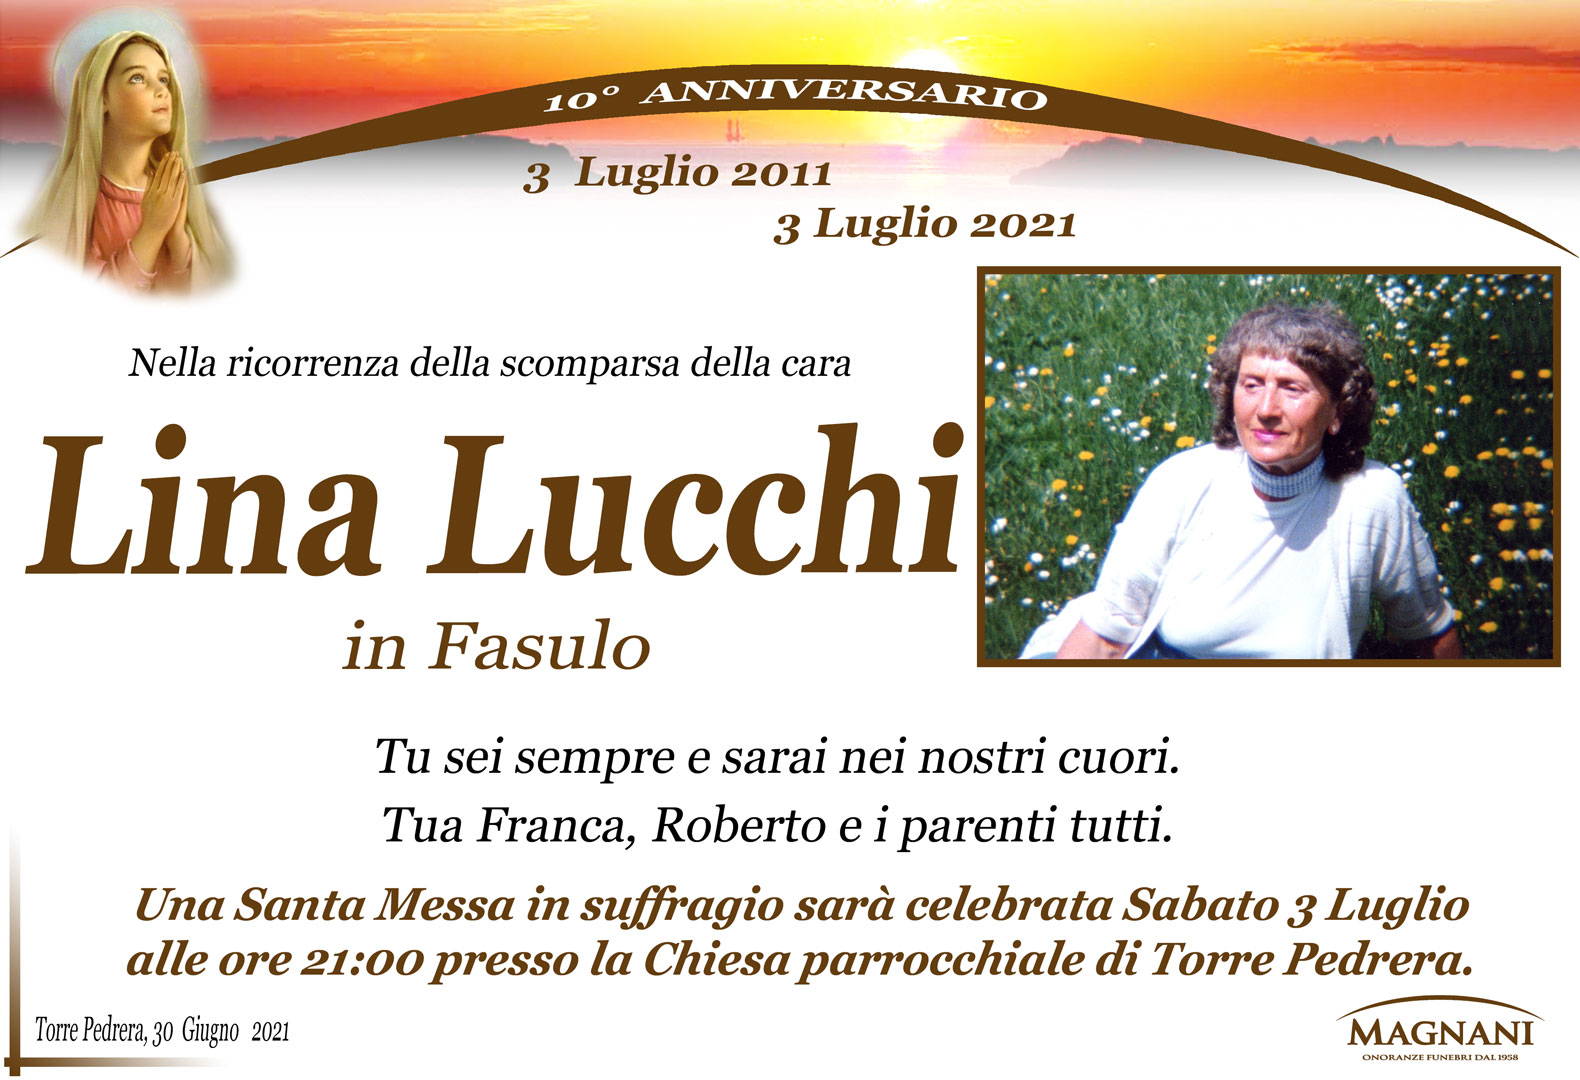 Lina Lucchi